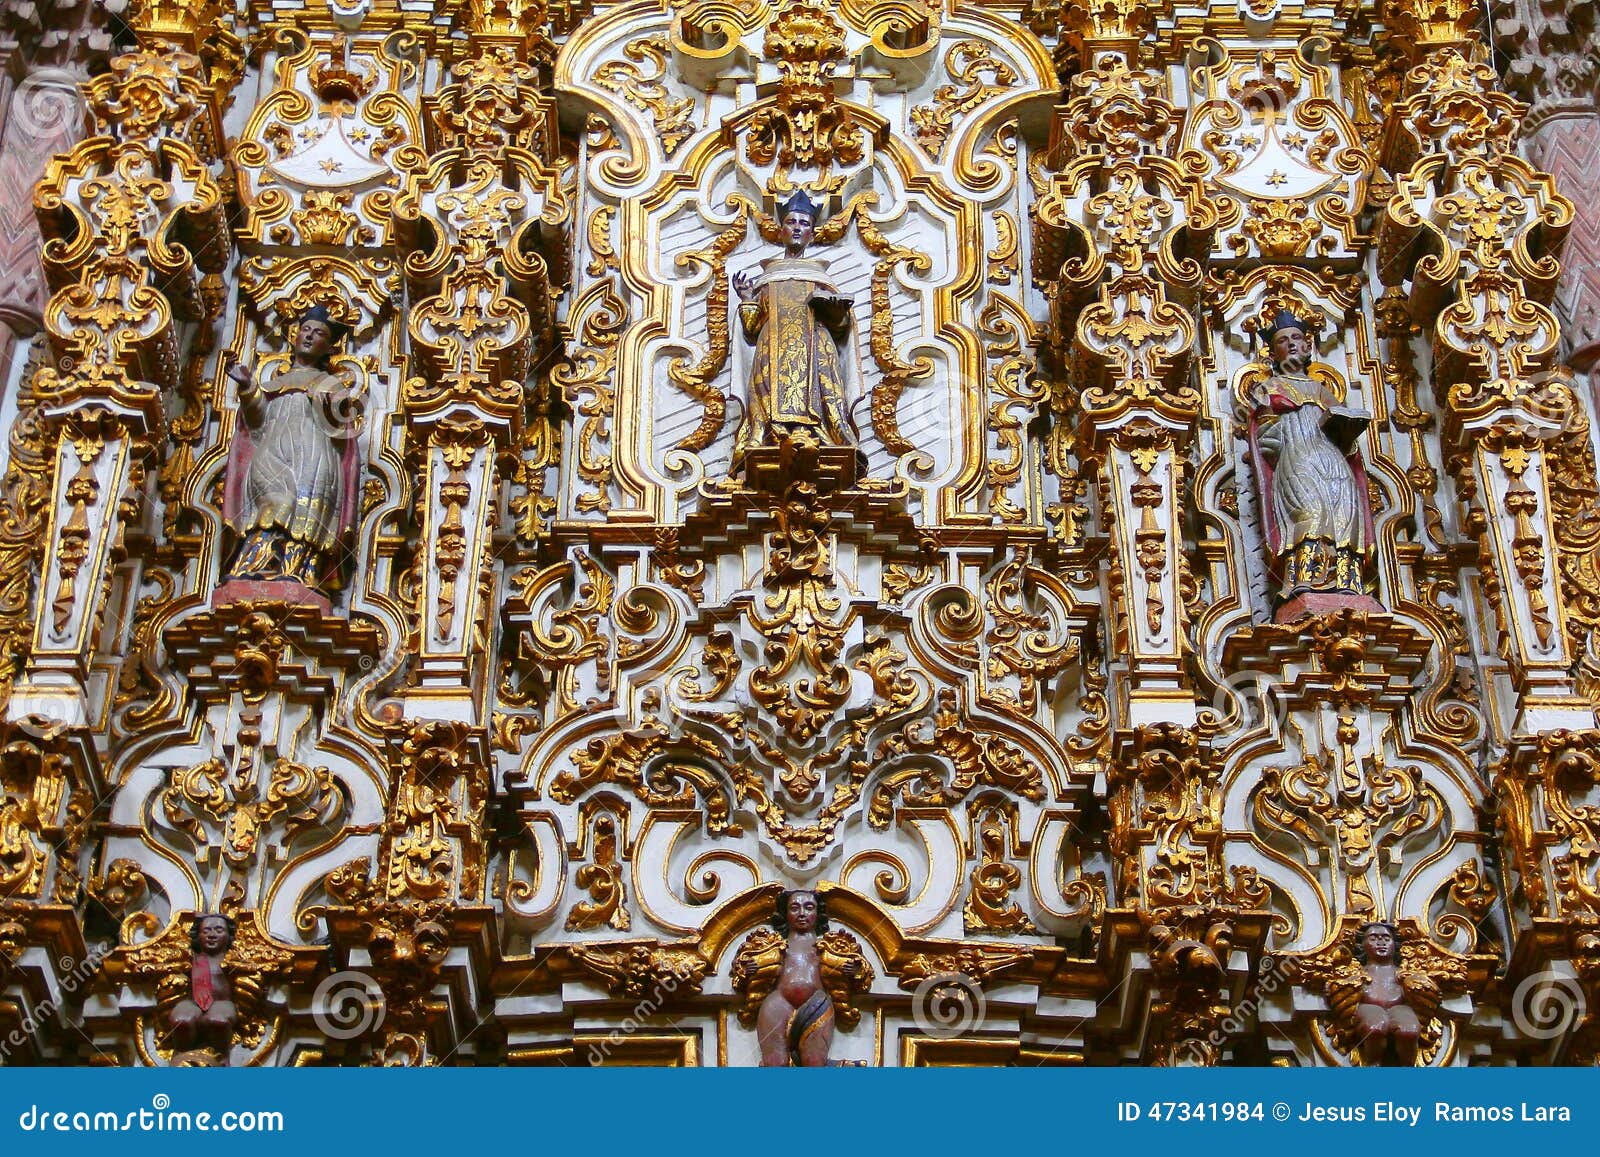 altarpiece at virgen del carmen church in san luis potosi, mexico iv